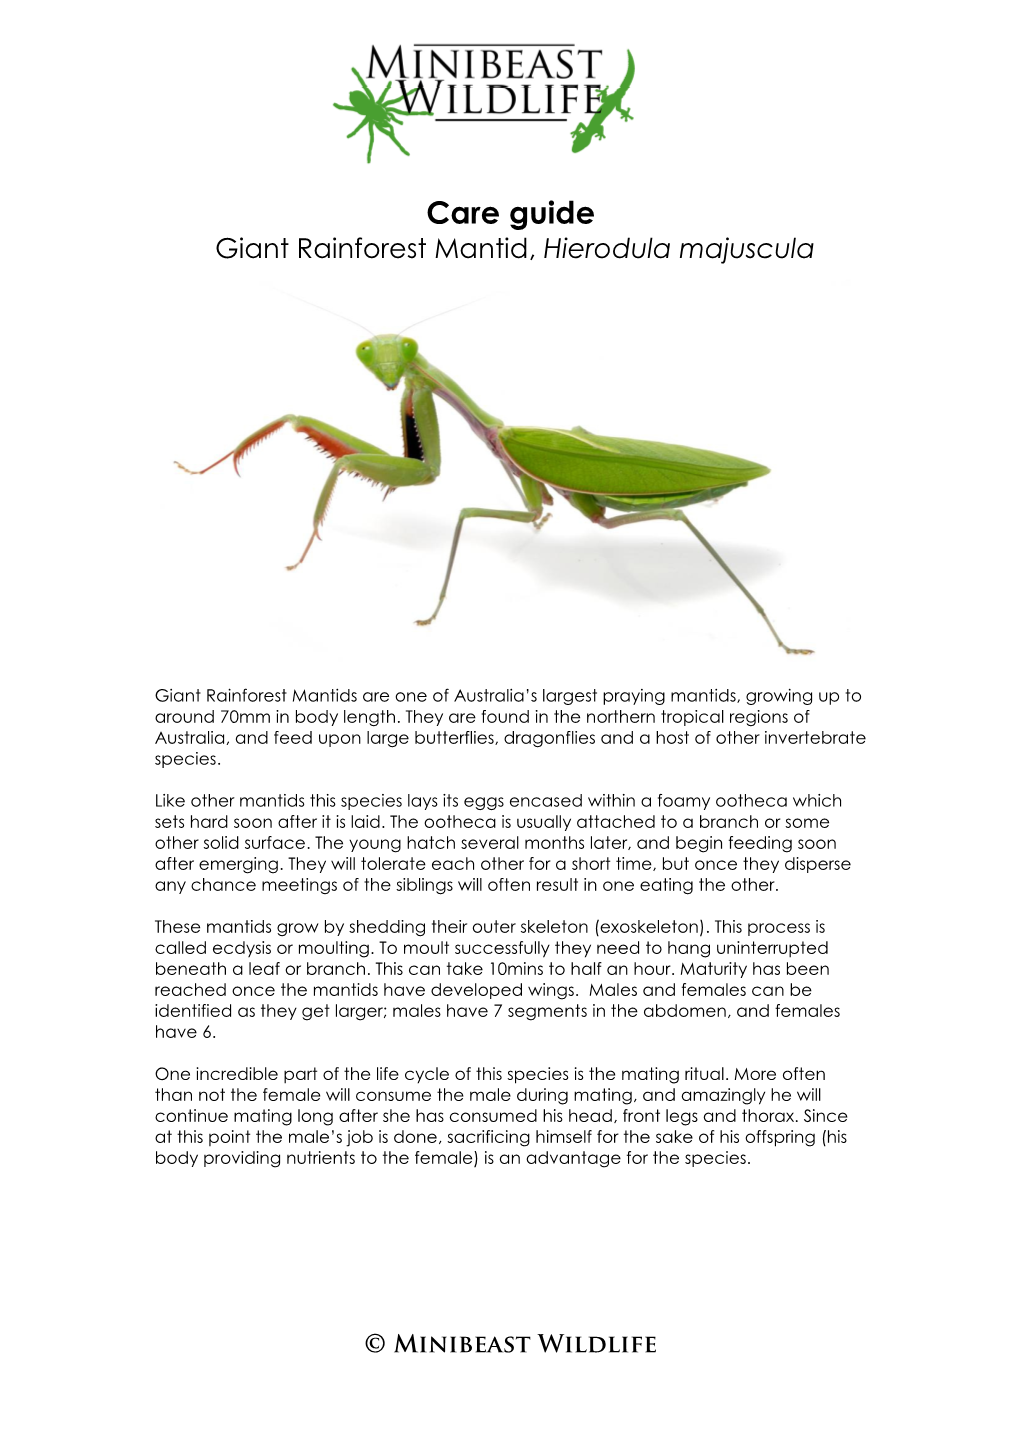 Giant Rainforest Mantis, Hierodula Majuscula